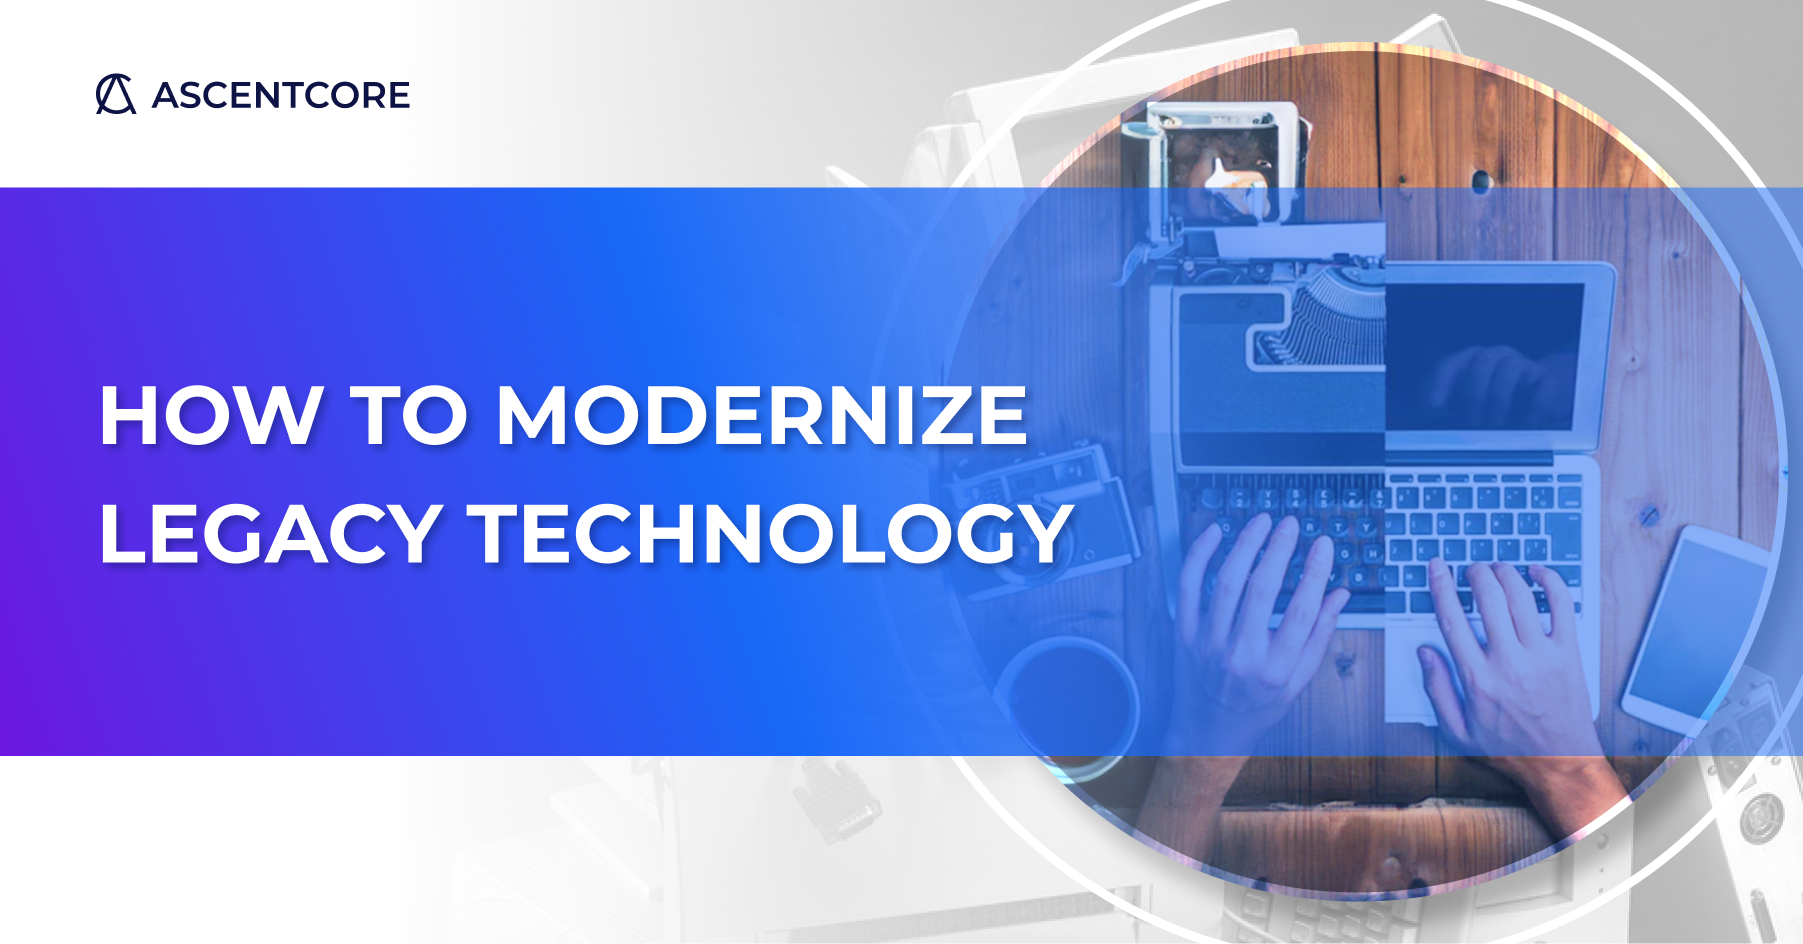 How to modernize legagy technology Ascentcore blog post cover